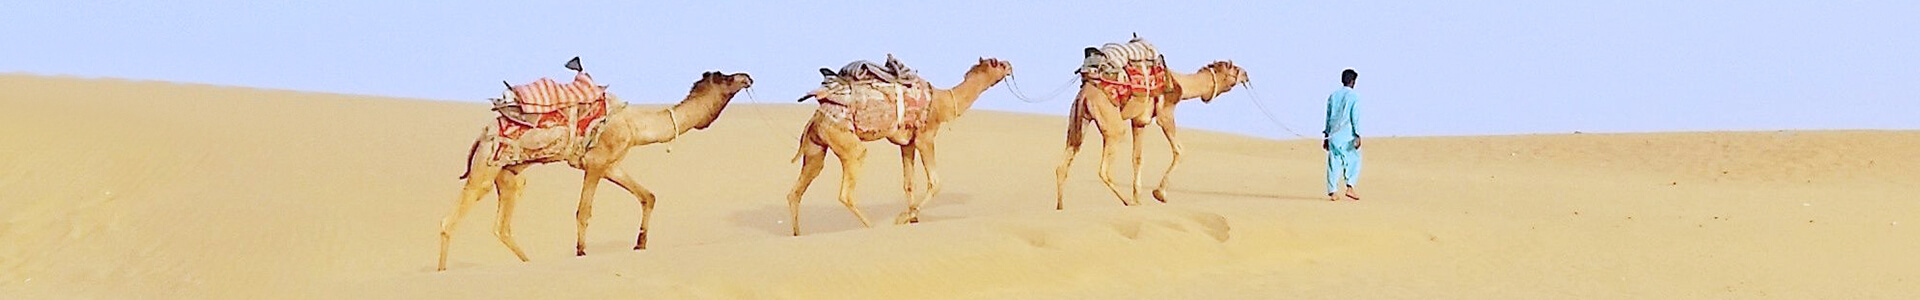 camels-thar-desert-hukam-rajasthan